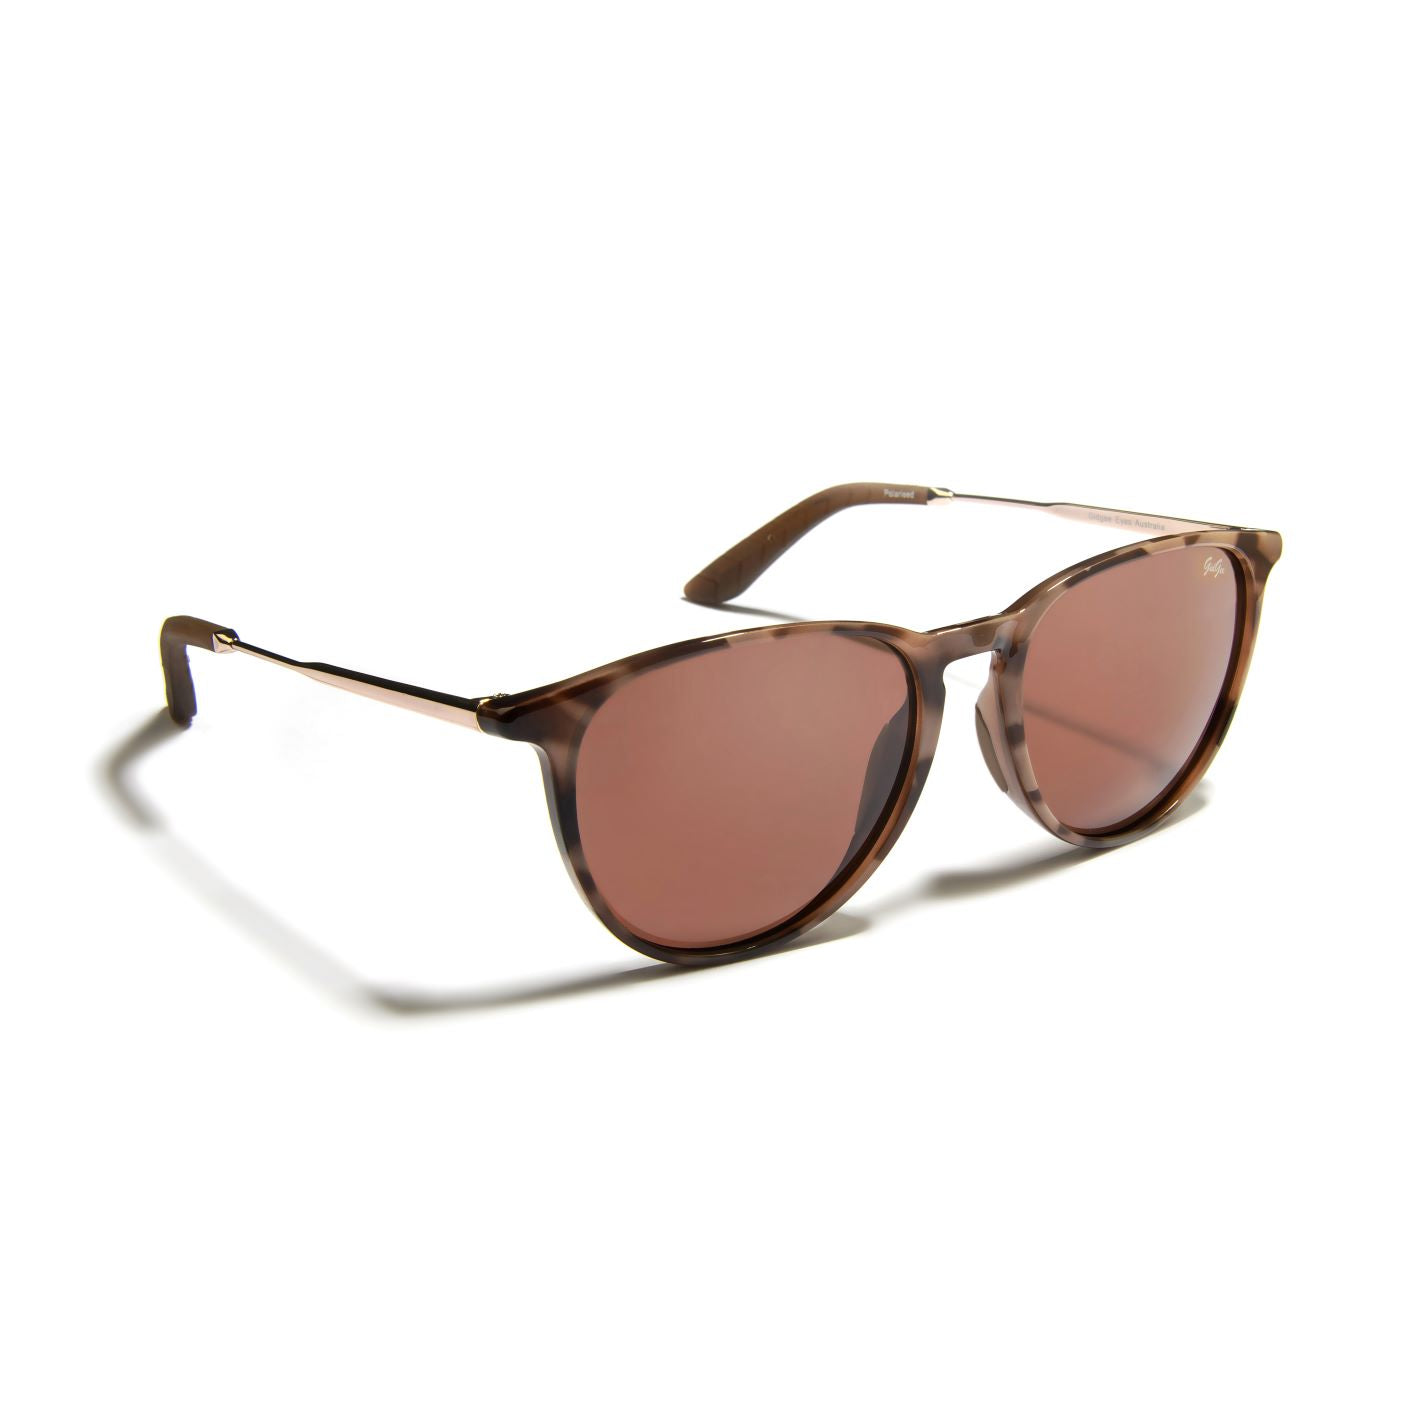 Gidgee Eyewear - Charisma Auburn Sunglasses